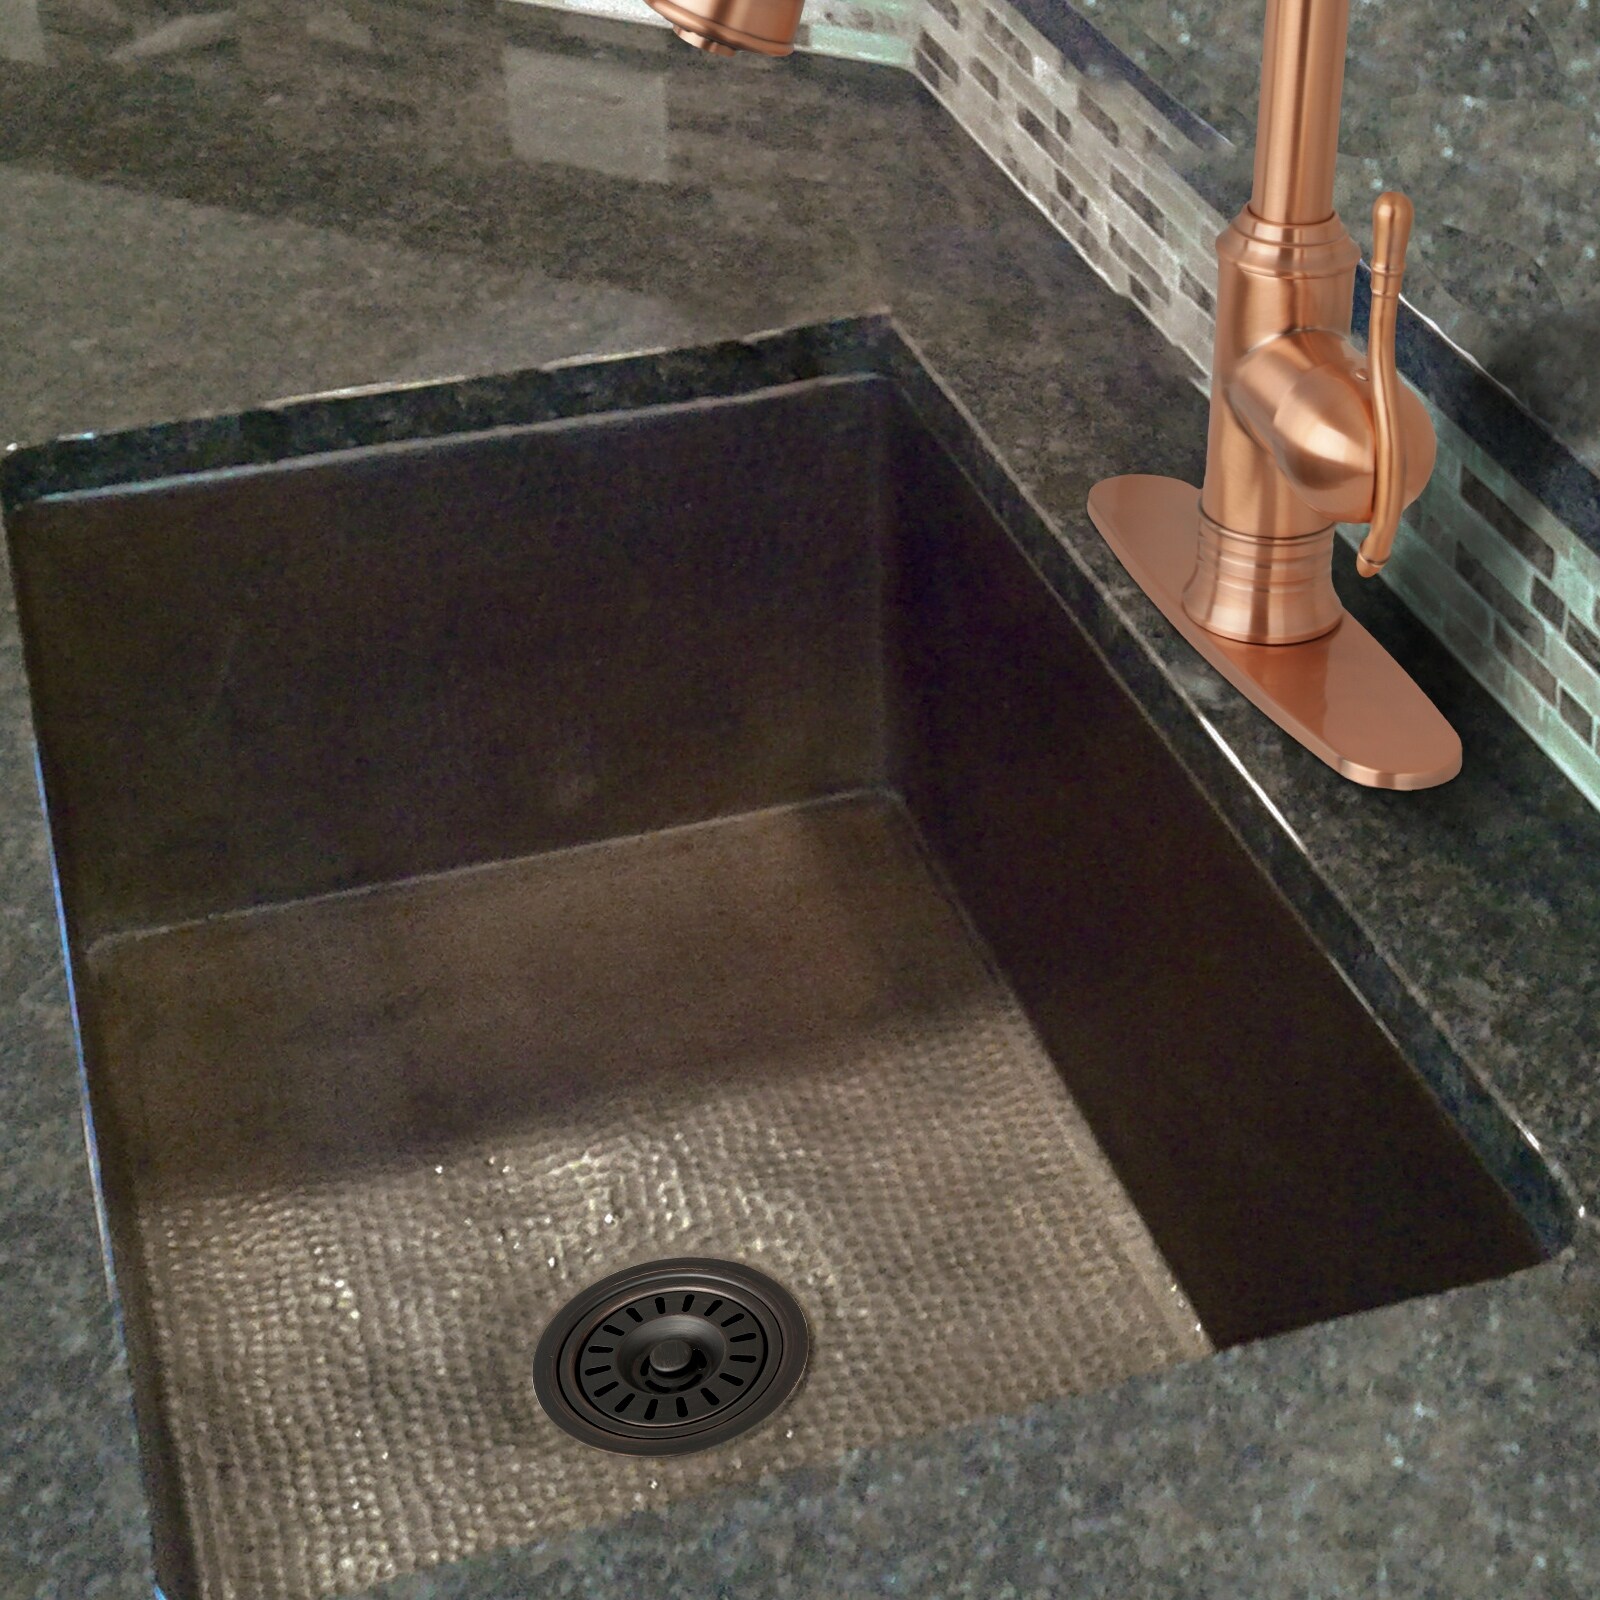 Copper Kitchen Sink Garbage Disposal Flange Stopper (2.85 Height) - On  Sale - Bed Bath & Beyond - 31914588